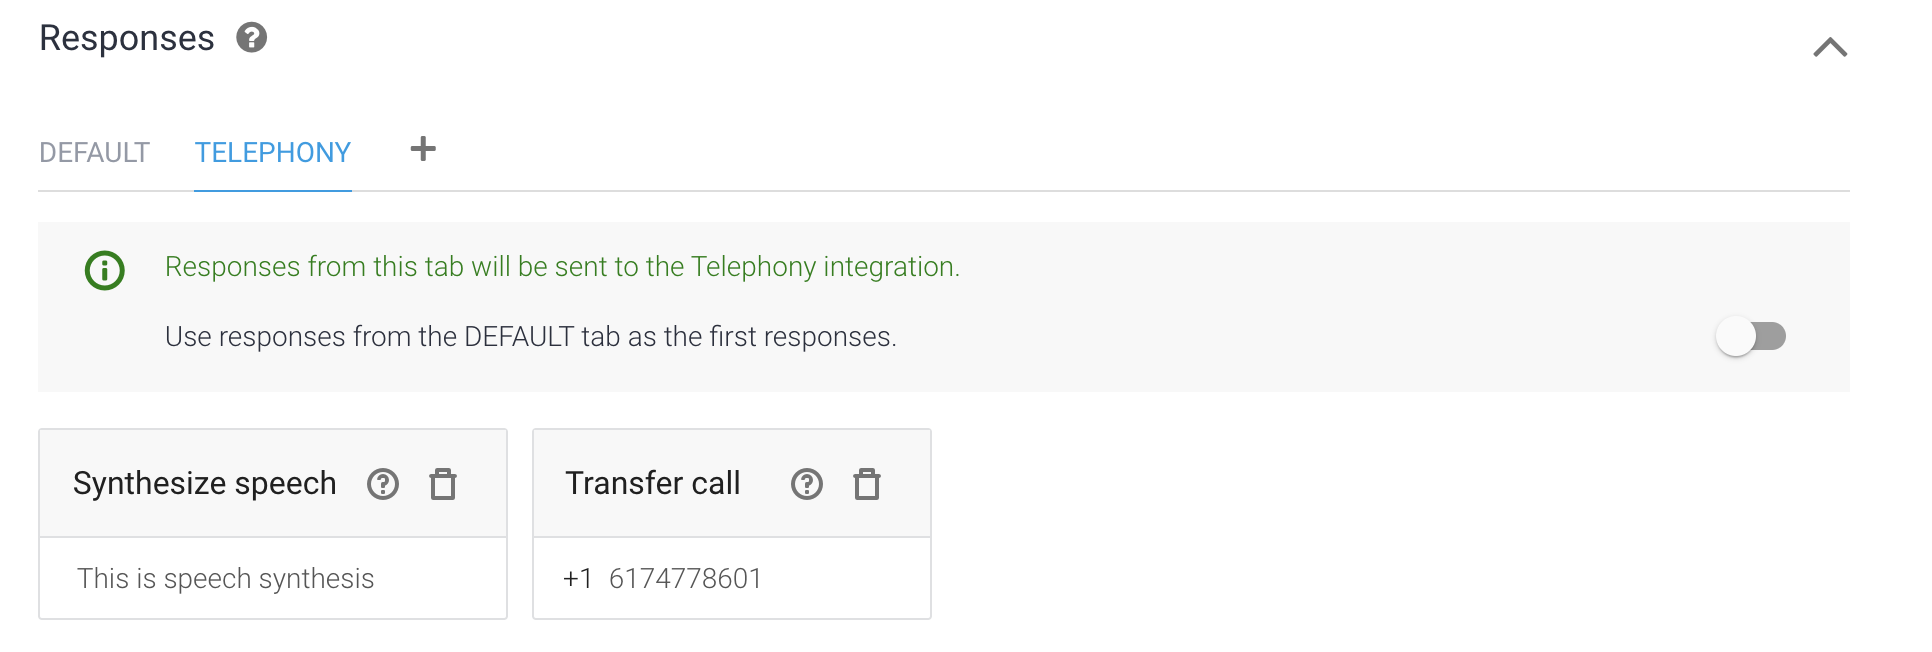 signalwire-dialogflow-telephony-fail